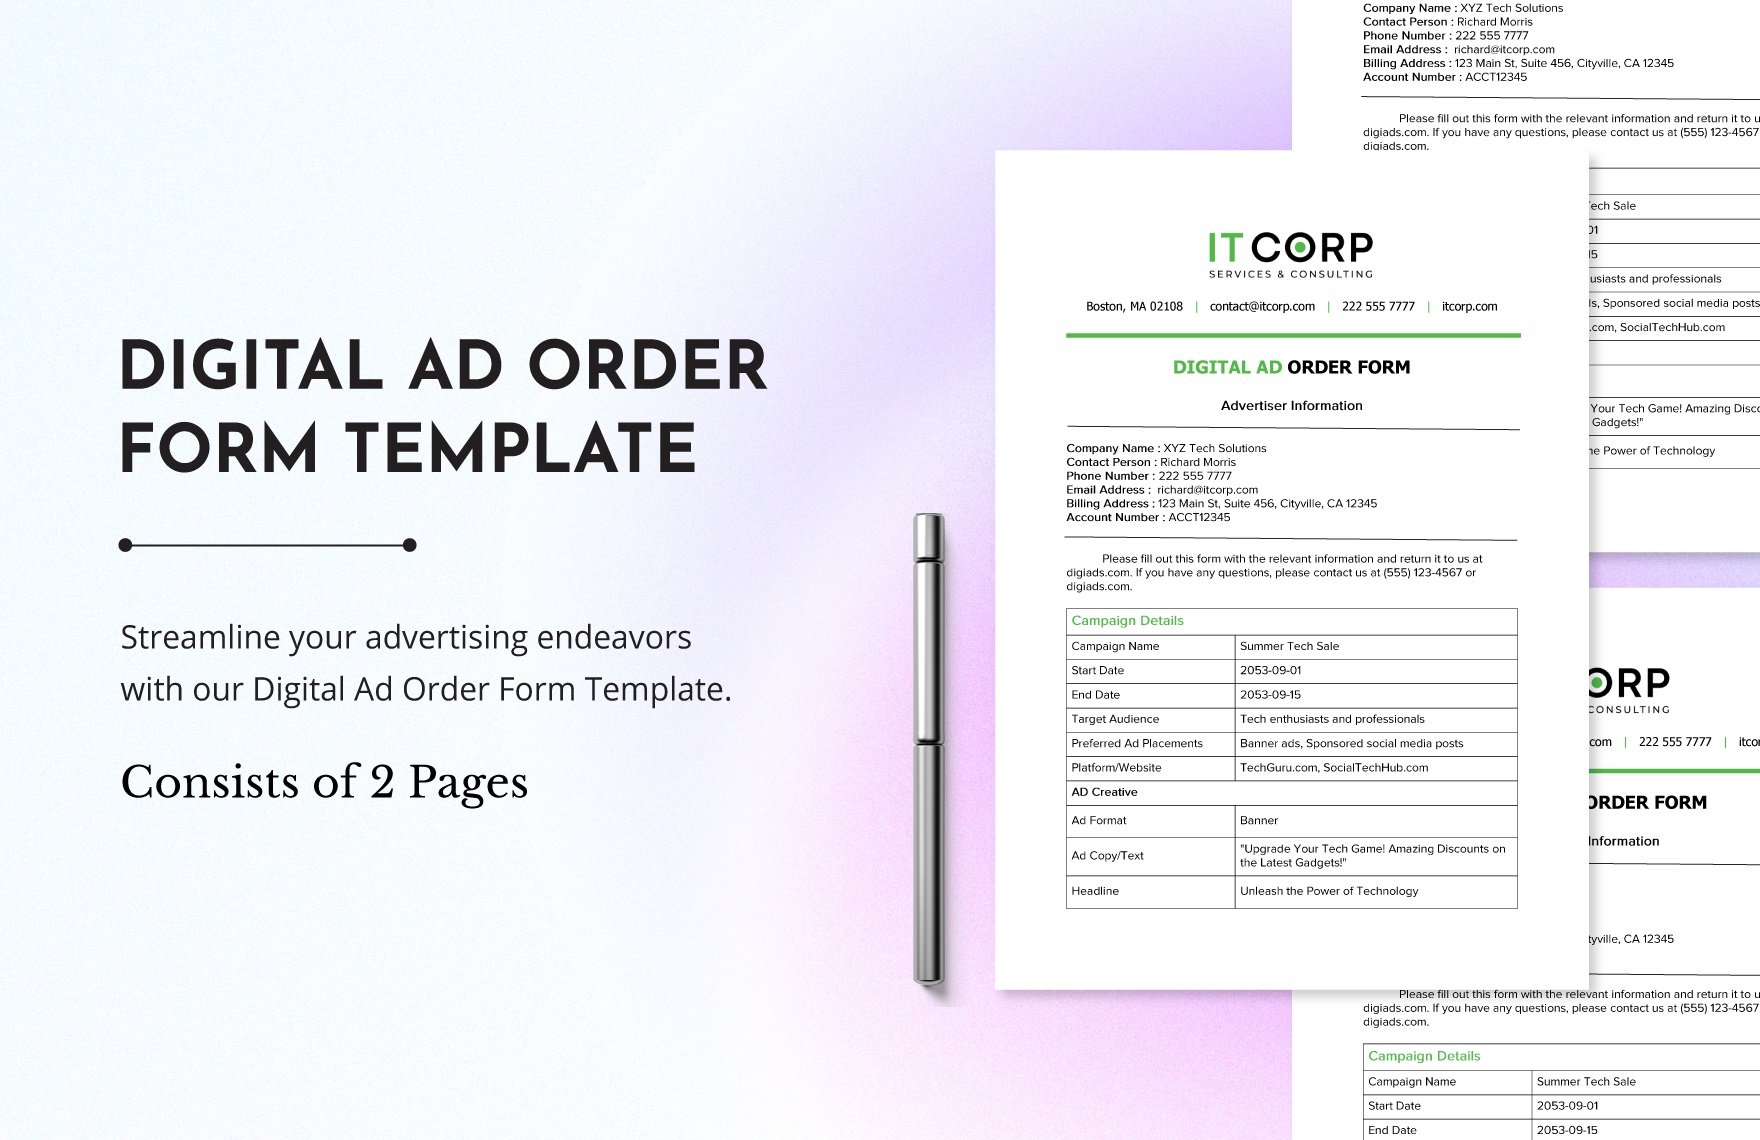 Digital Ad Order Form Template in Word, Google Docs, PDF